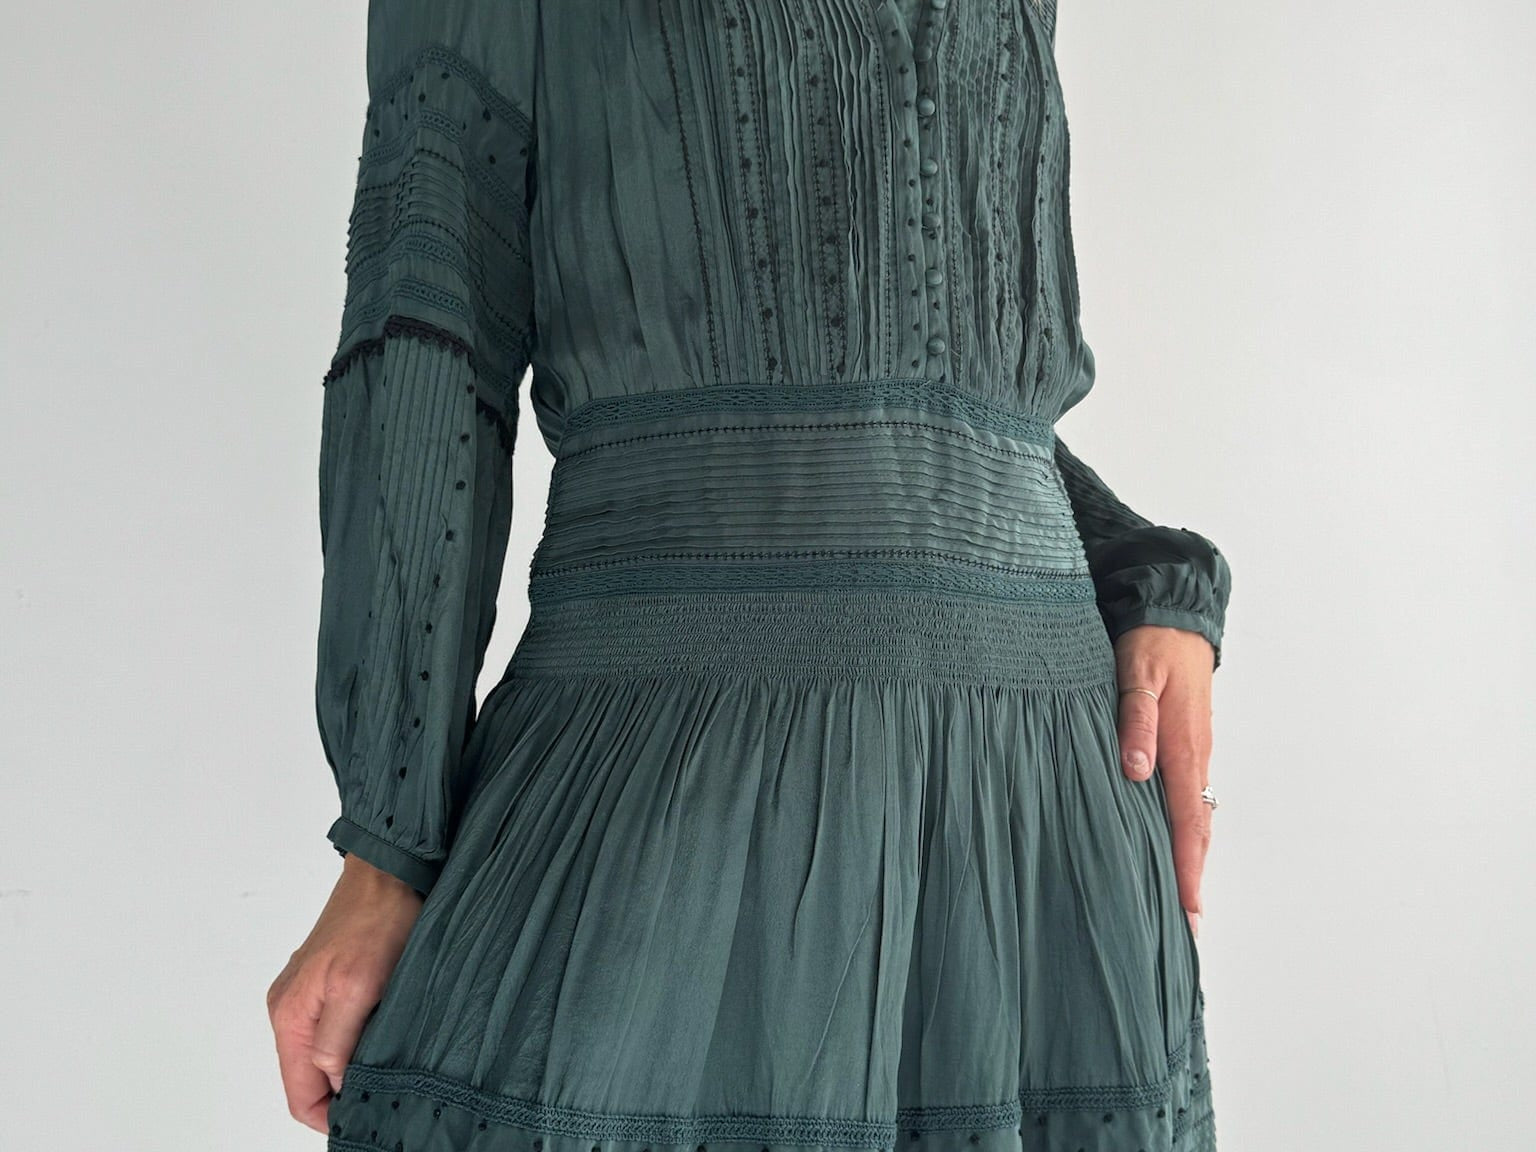 SisterGolden Emerald Lake Dress